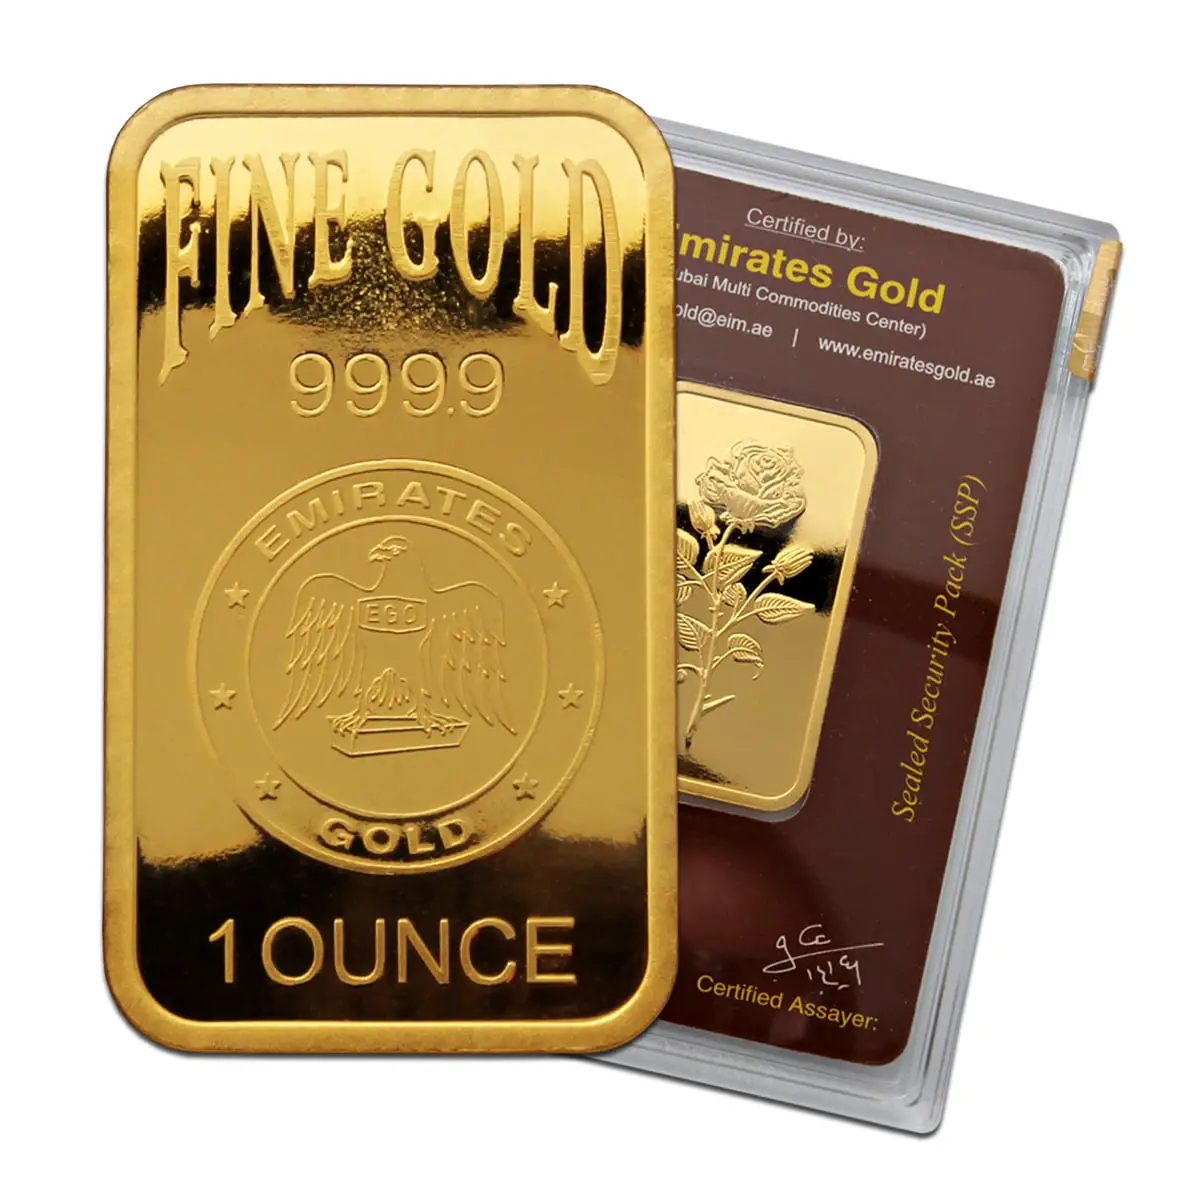 Emirates Gold 1 ounce Gold Bar